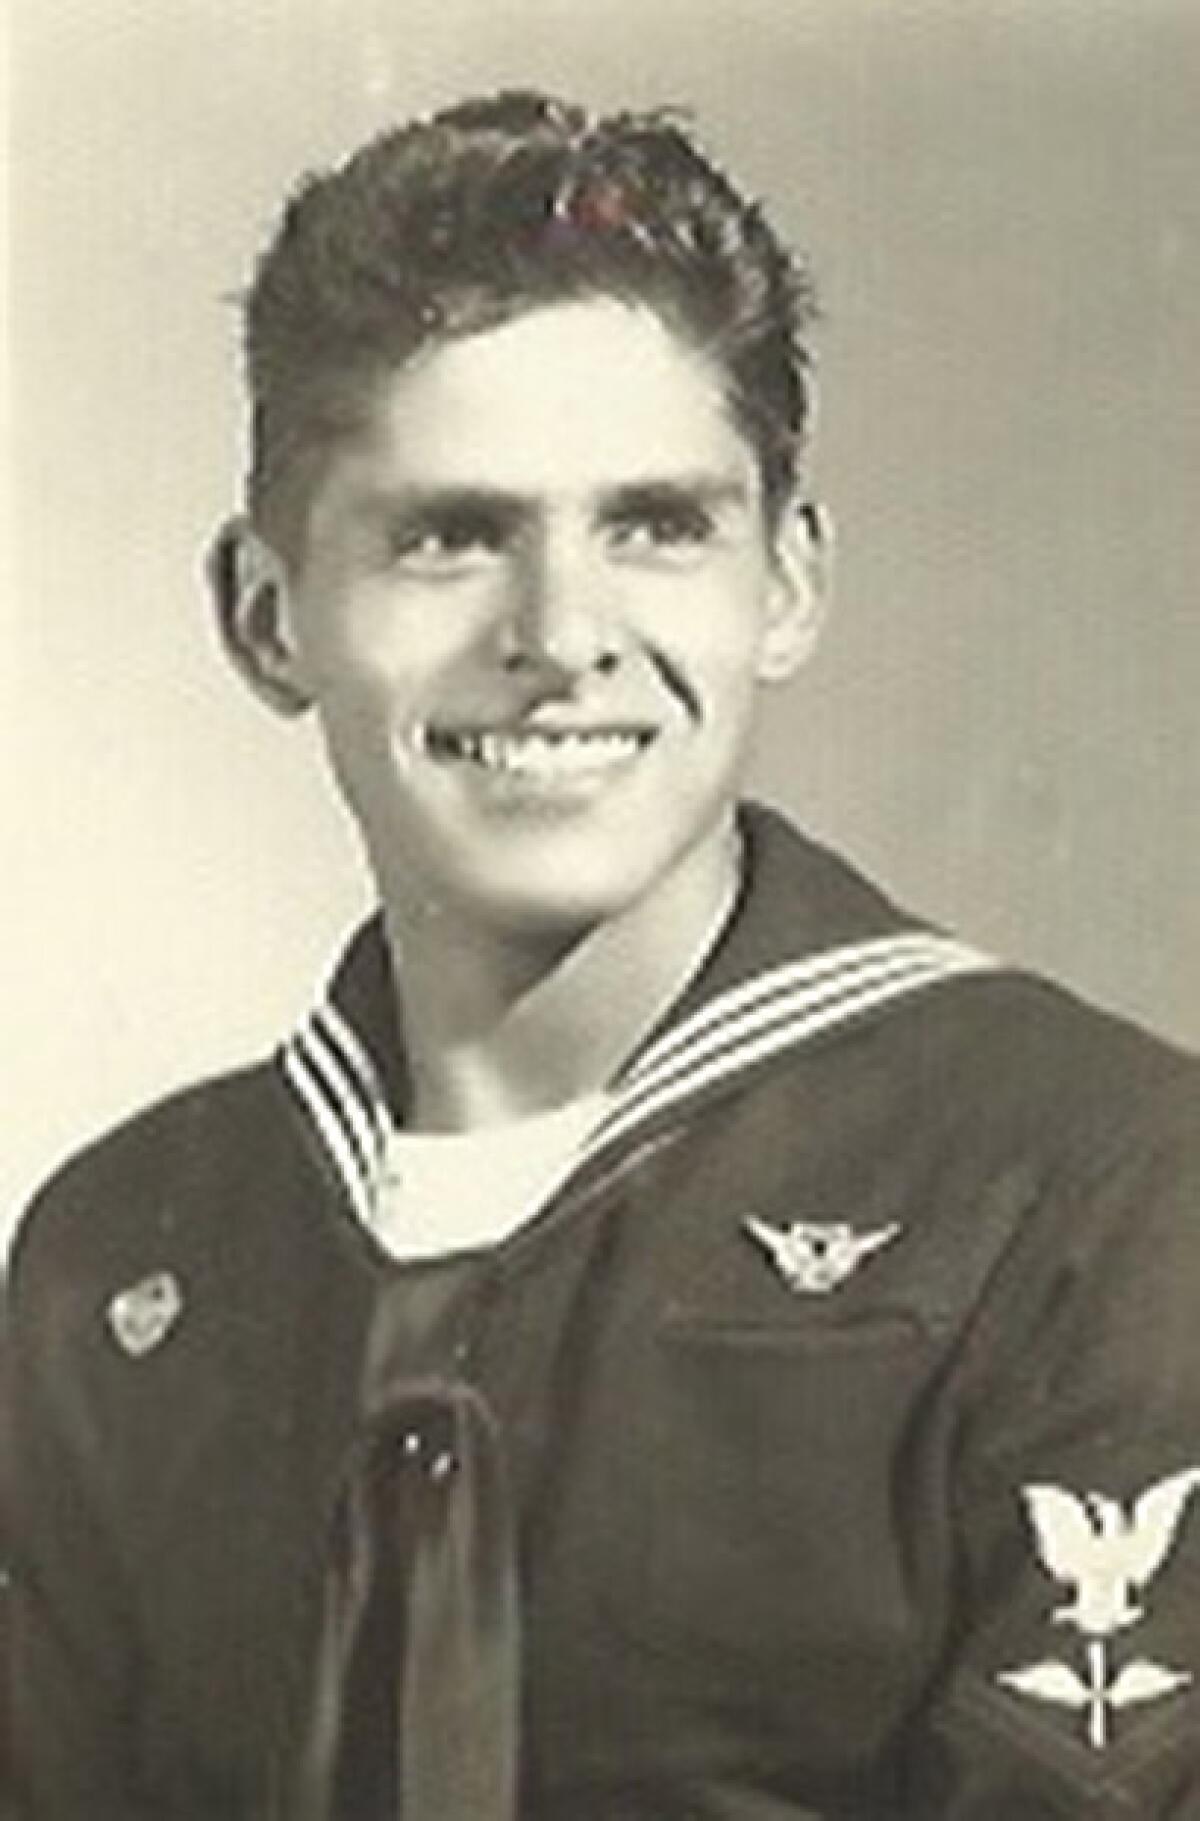 A young Julian Nava smiles in his Navy uniform